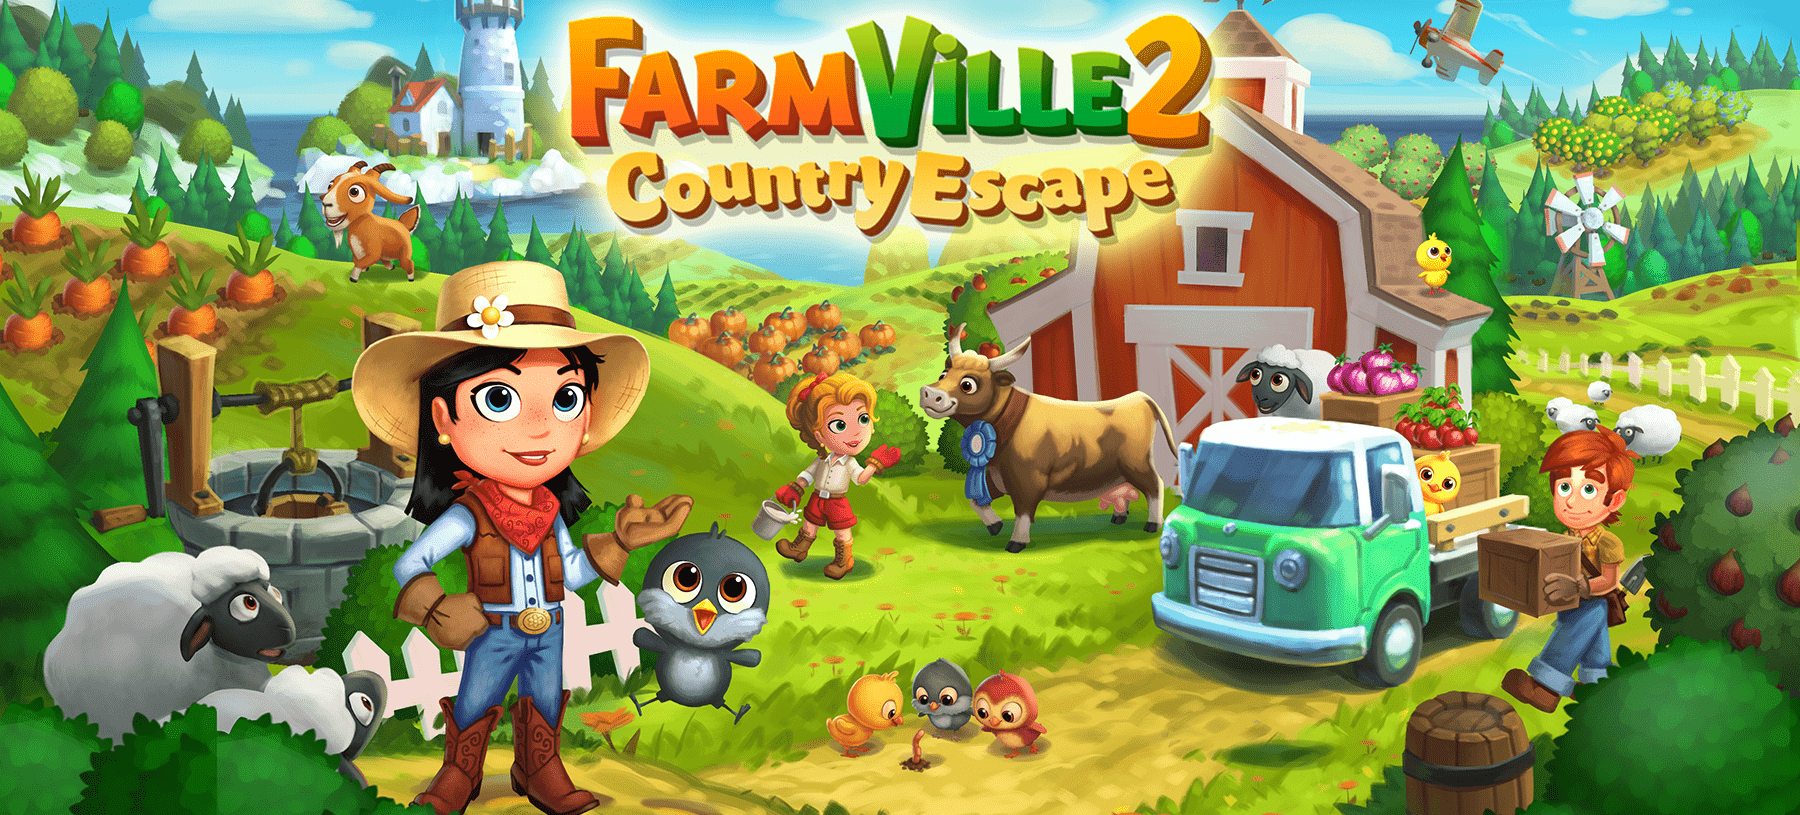 farmville download for pc